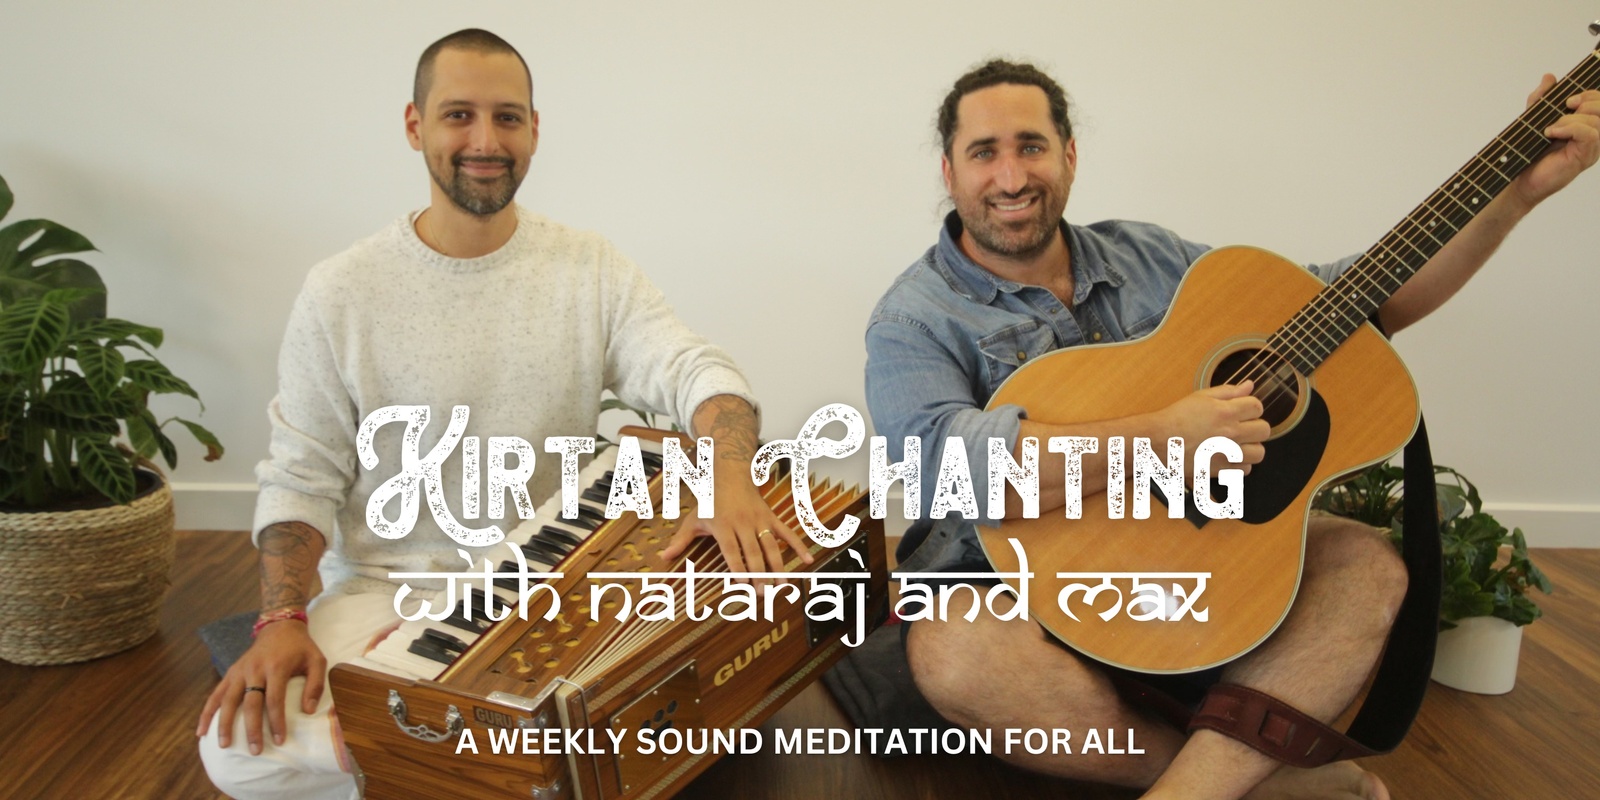 Banner image for Weekly Kirtan Chanting with Nataraj and Max